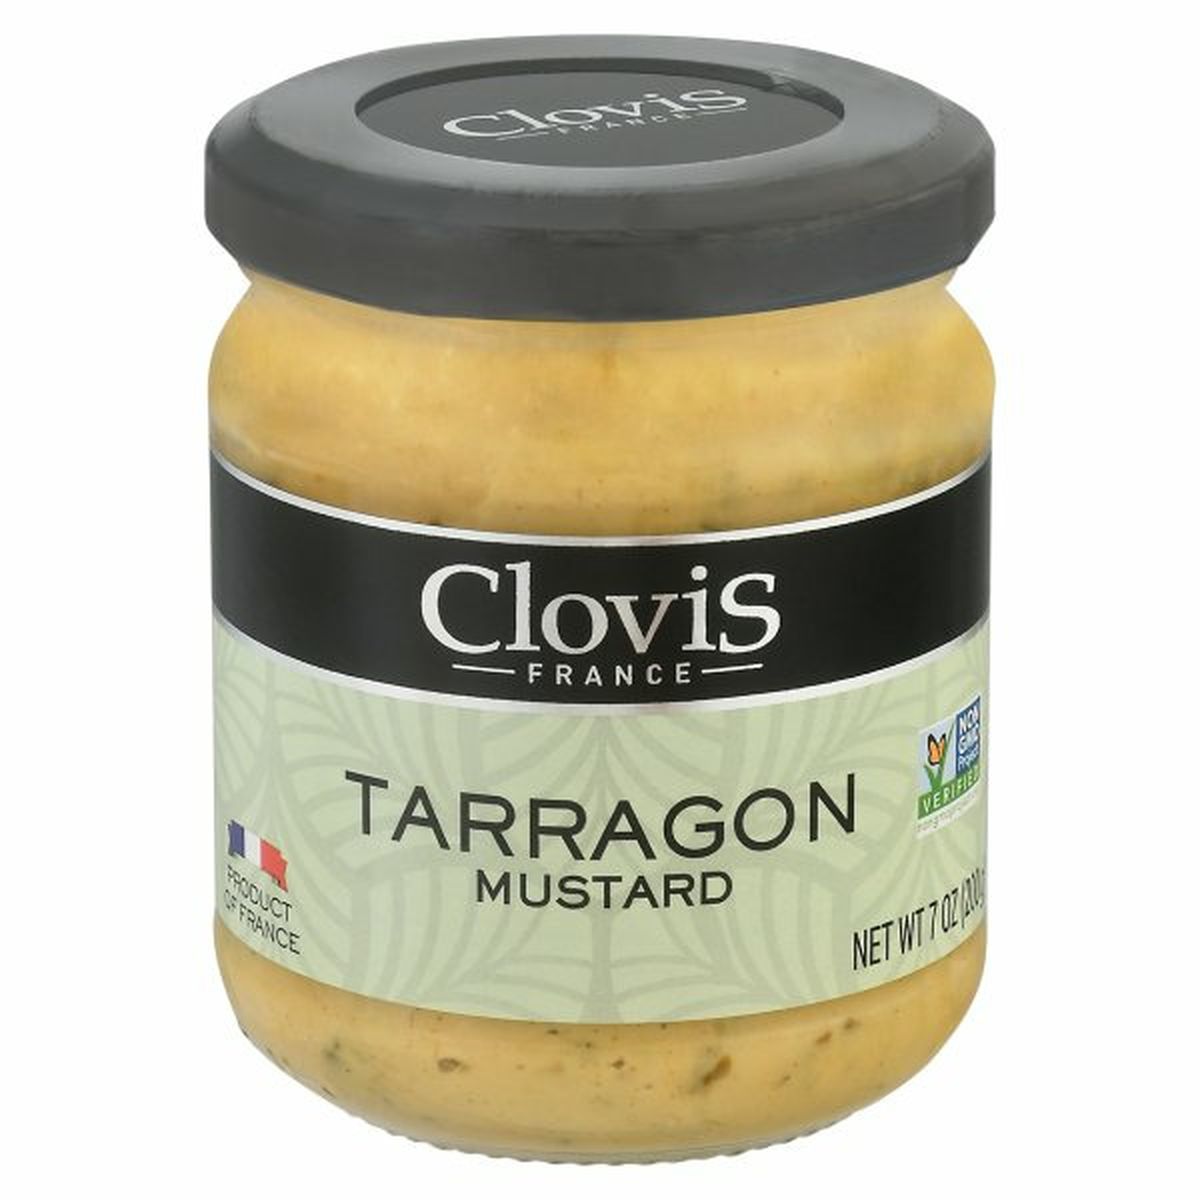 Calories in Clovis France Mustard, Tarragon